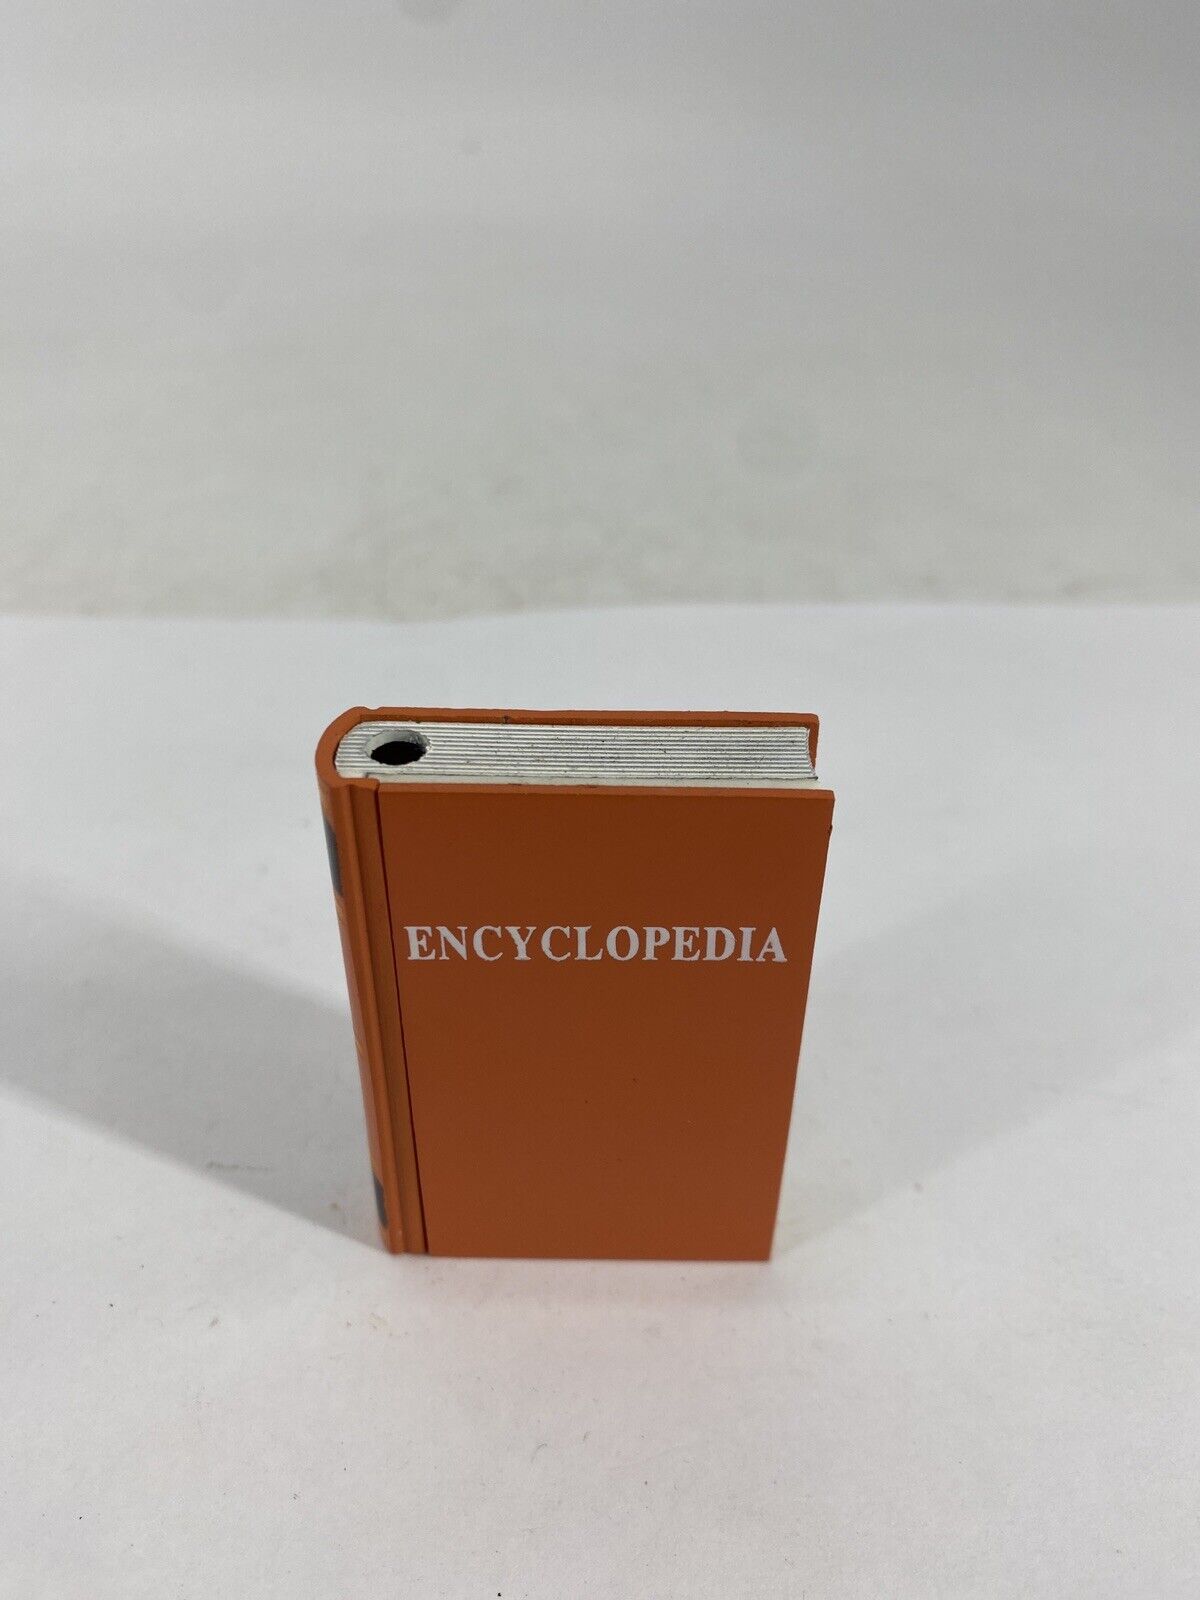 RARE Vintage Novelty Encyclopedia Book Pocket Lighter Refillable Butane Orange